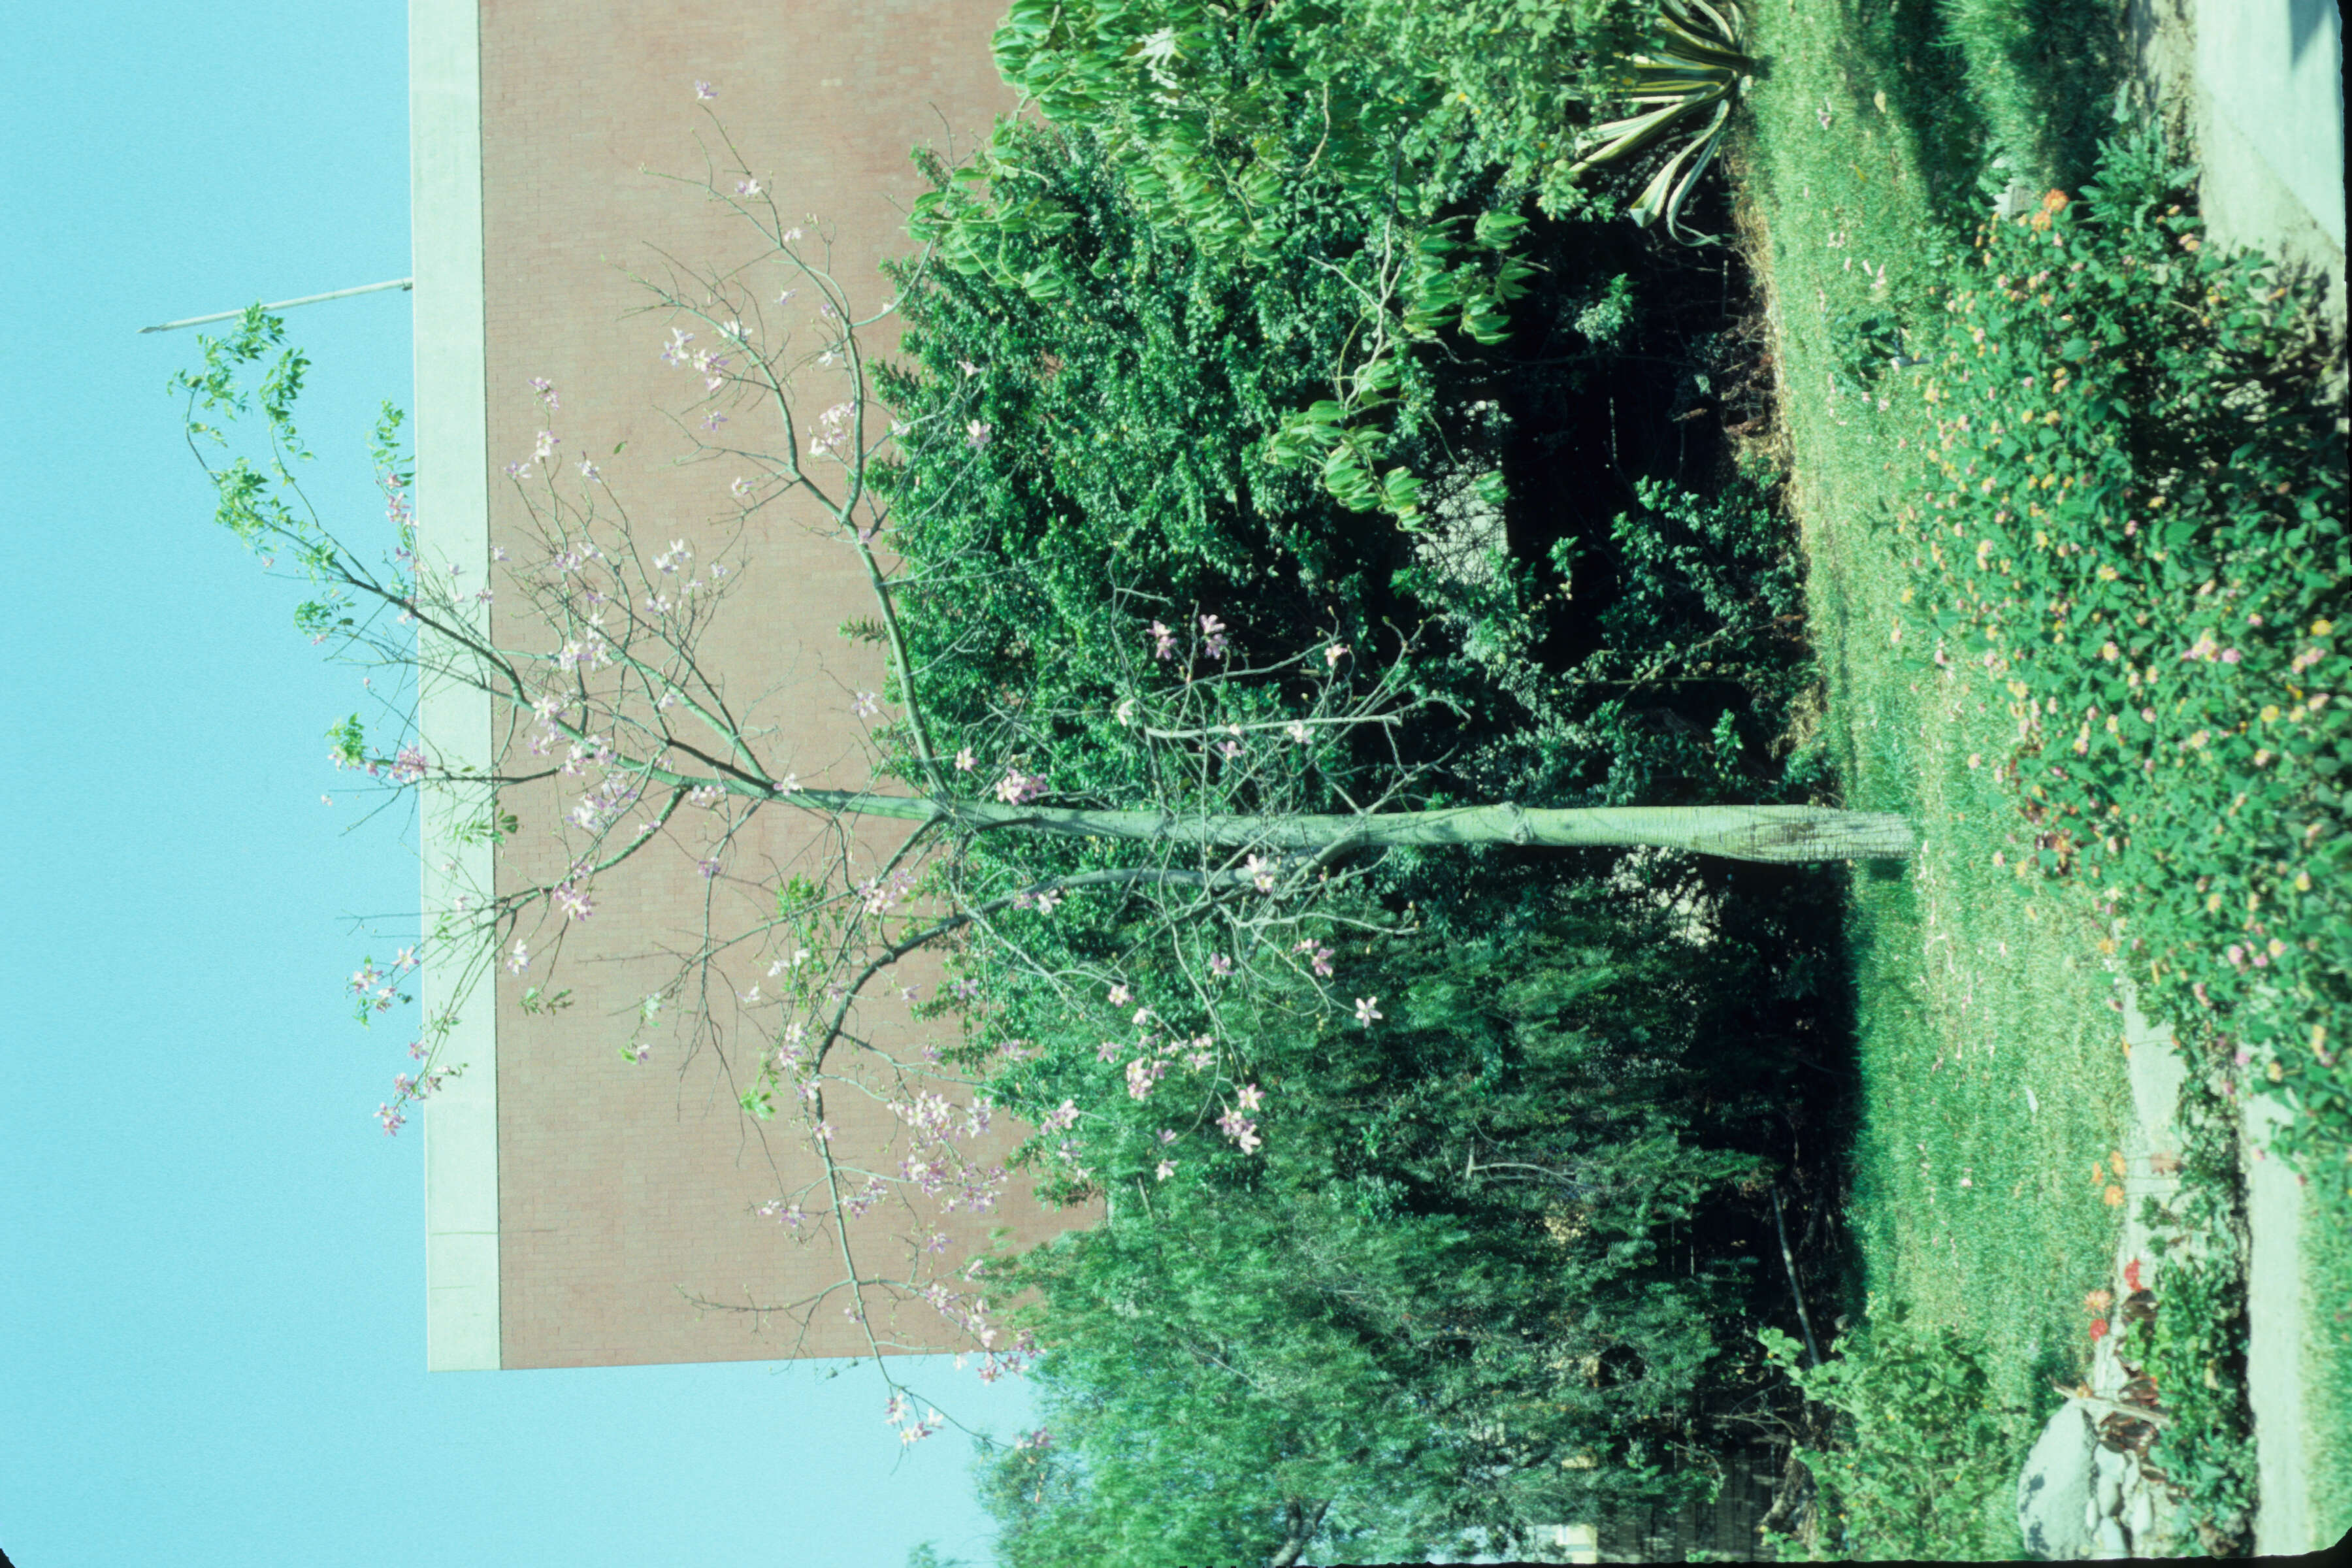 Image of Pink kapok tree